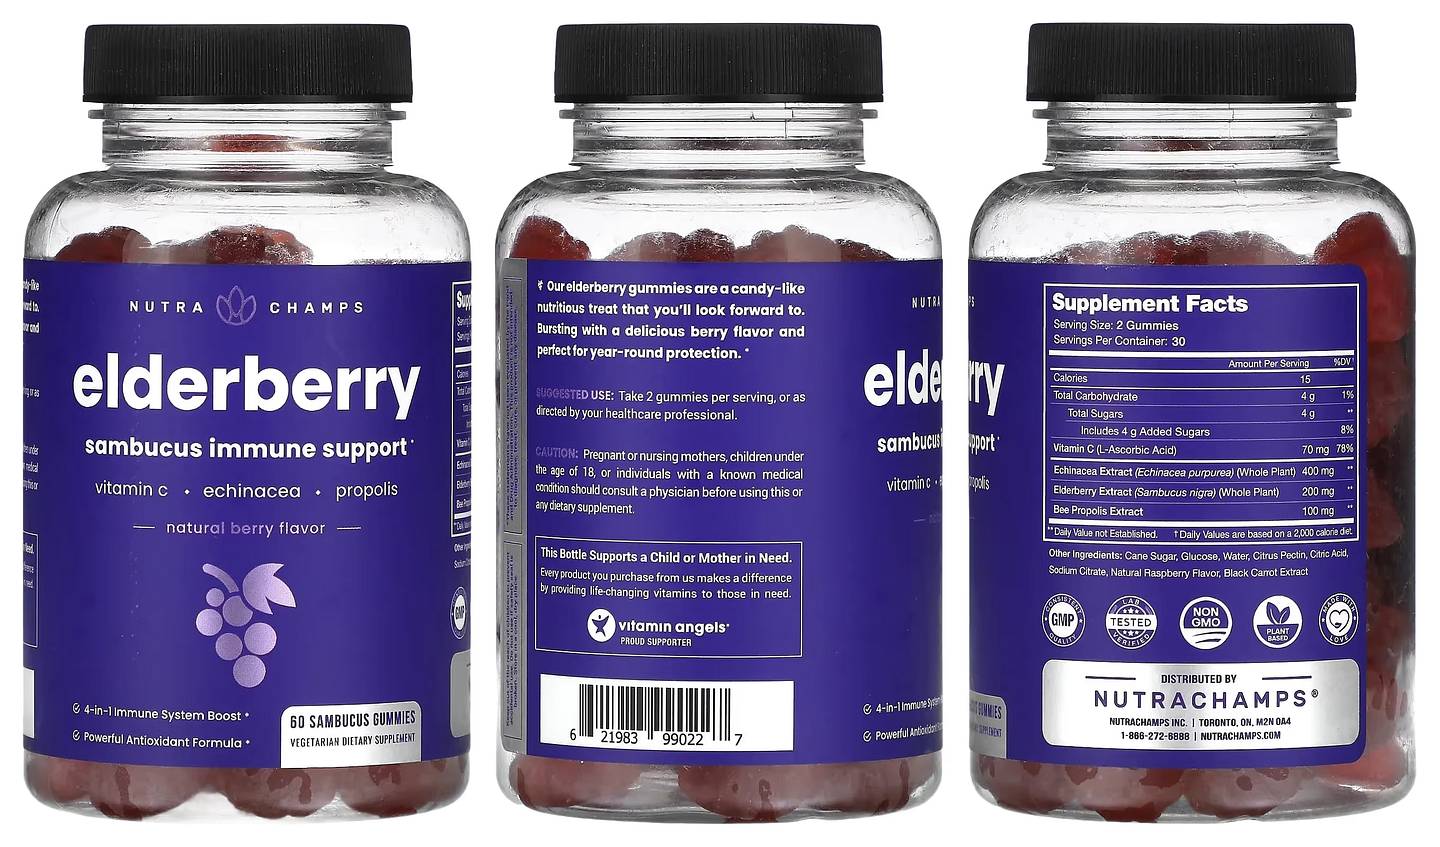 NutraChamps, Elderberry packaging